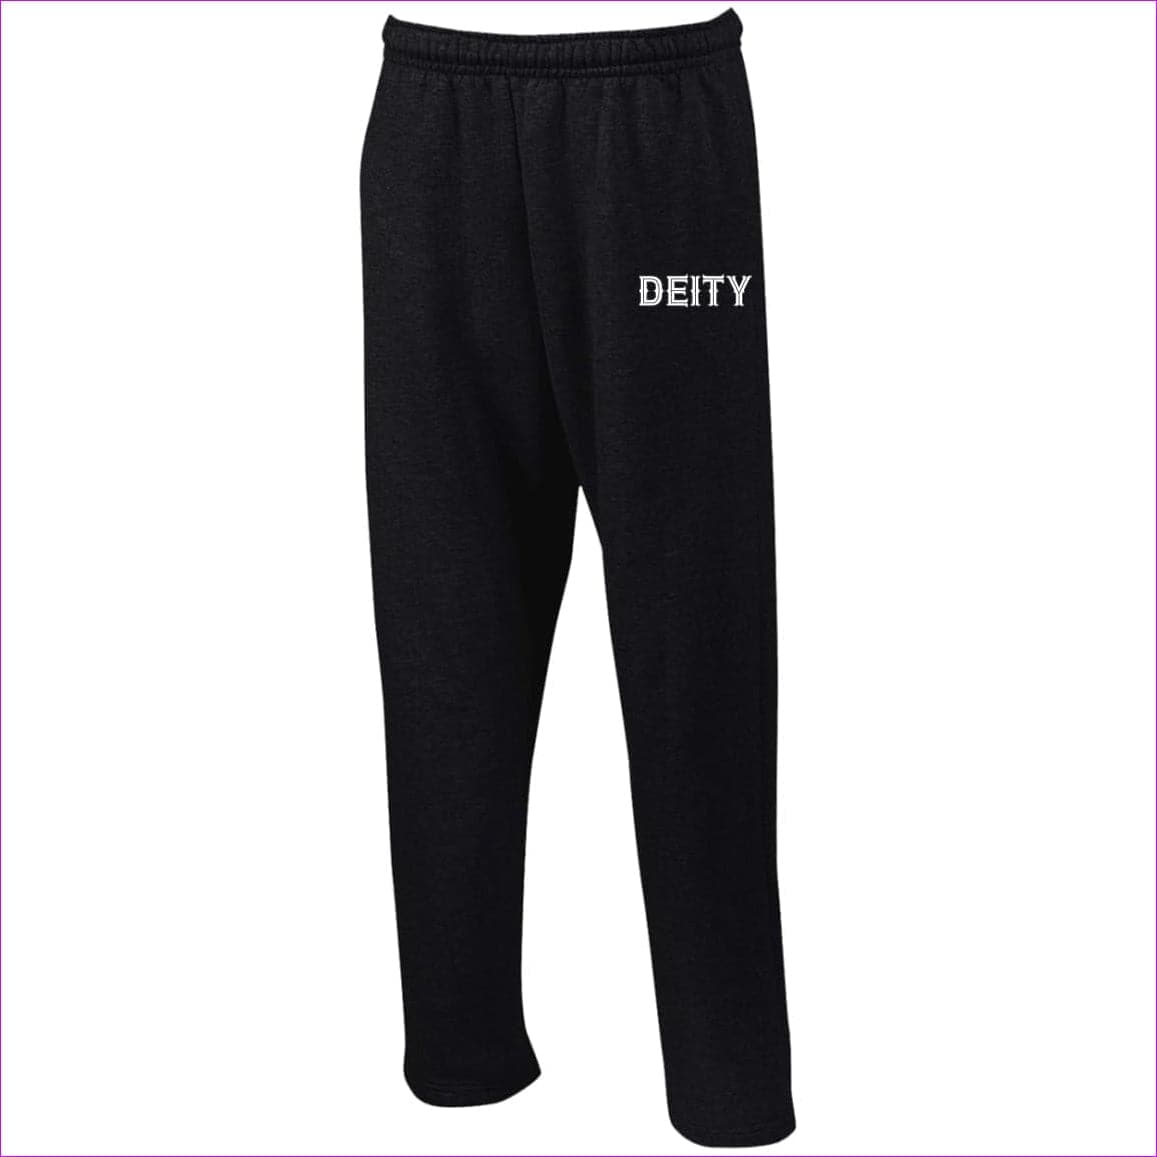 Black Deity Open Bottom Sweatpants with Pockets - unisex sweatpants at TFC&H Co.